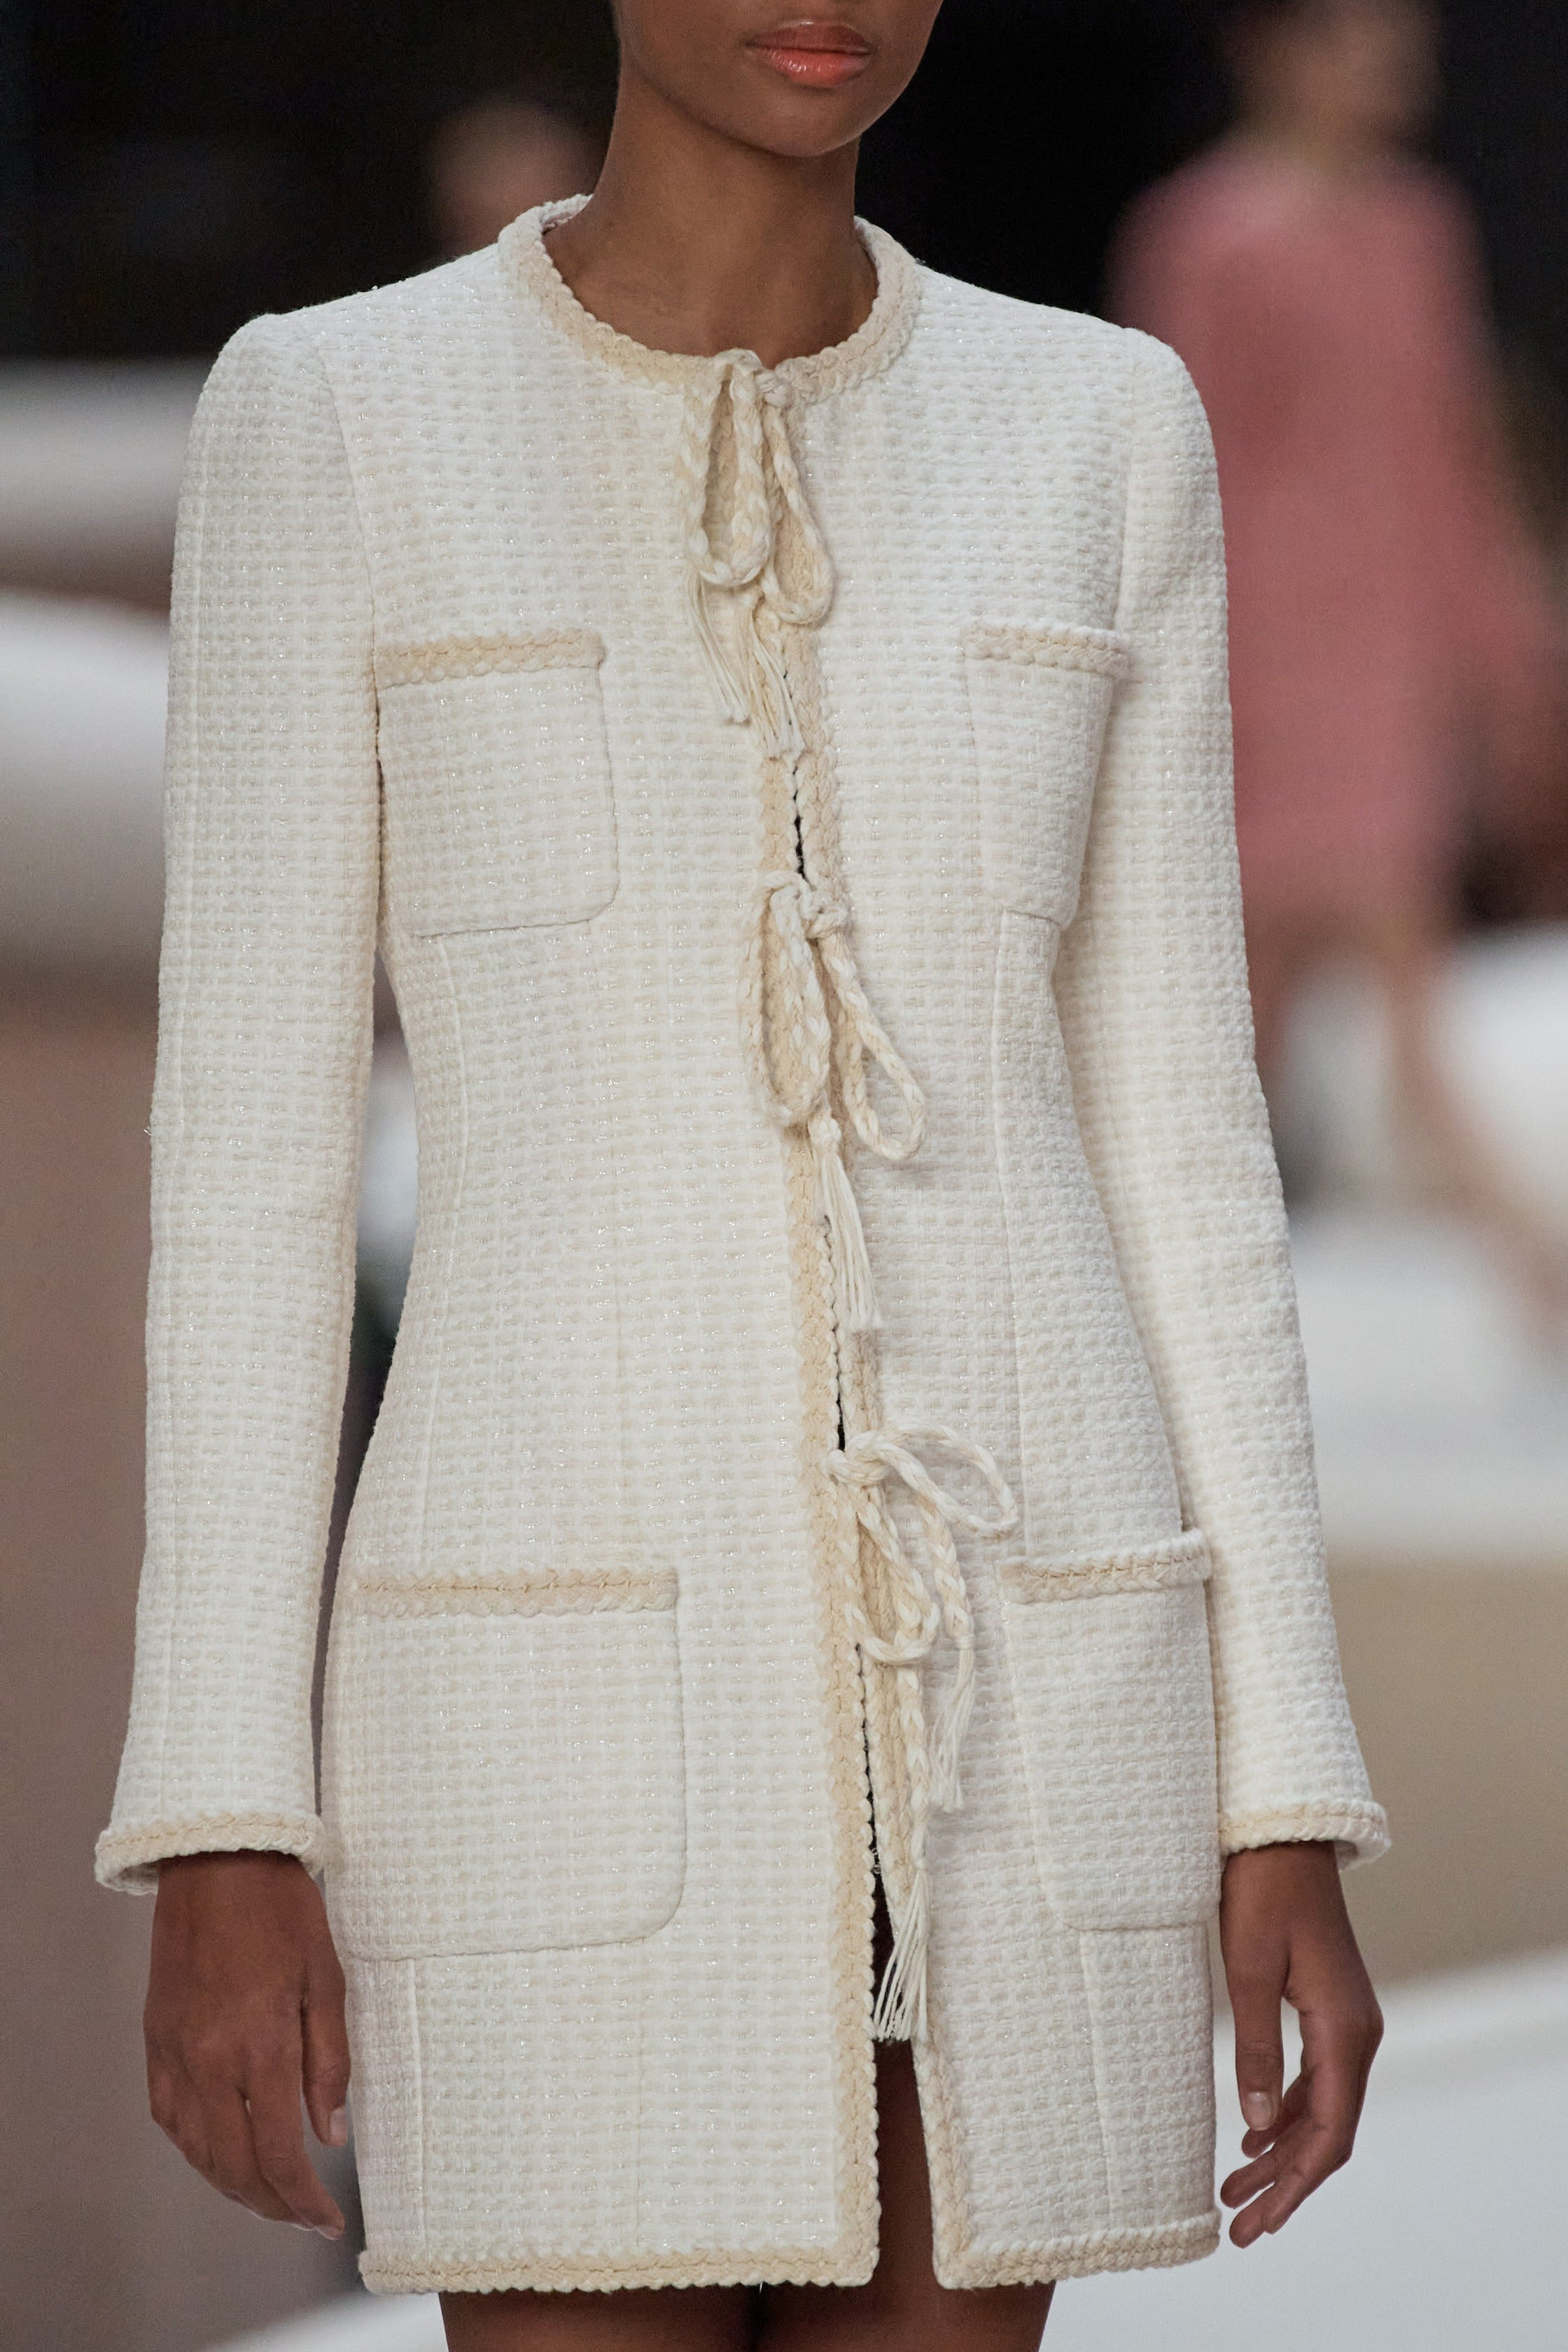 00035-Chanel-Couture-Spring-22-Paris-DETAILS-credit-Alessandro-Viero-Gorunway.jpeg